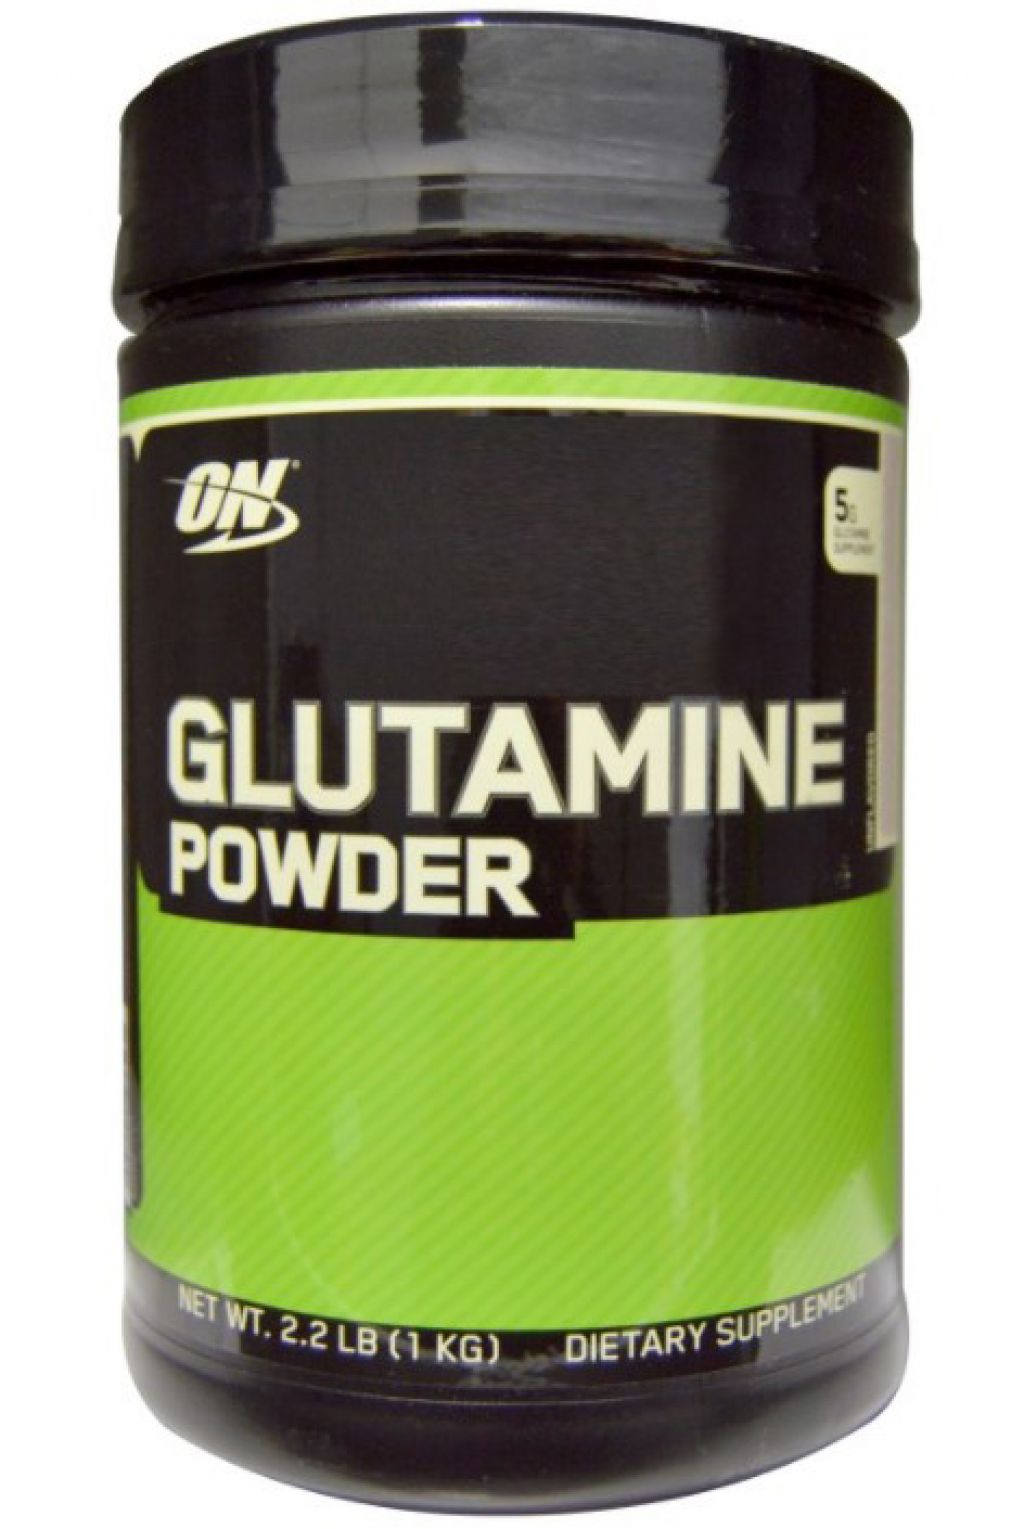 Optimum nutrition powder